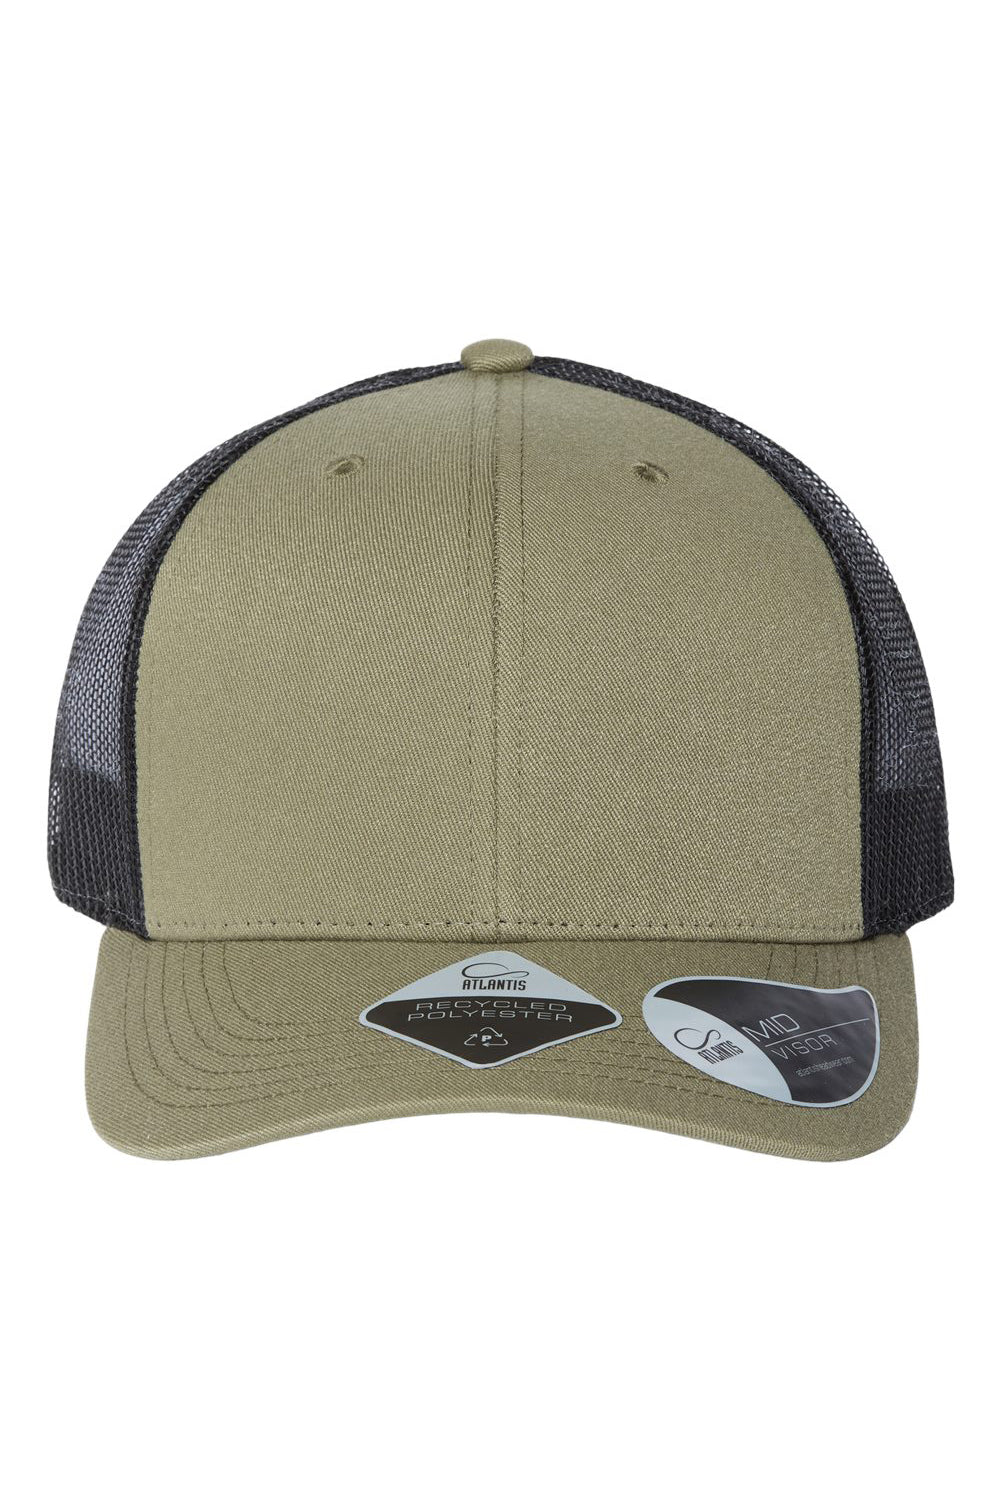 Atlantis Headwear BRYCE Mens Sustainable Snapback Trucker Hat Olive Green/Black Flat Front